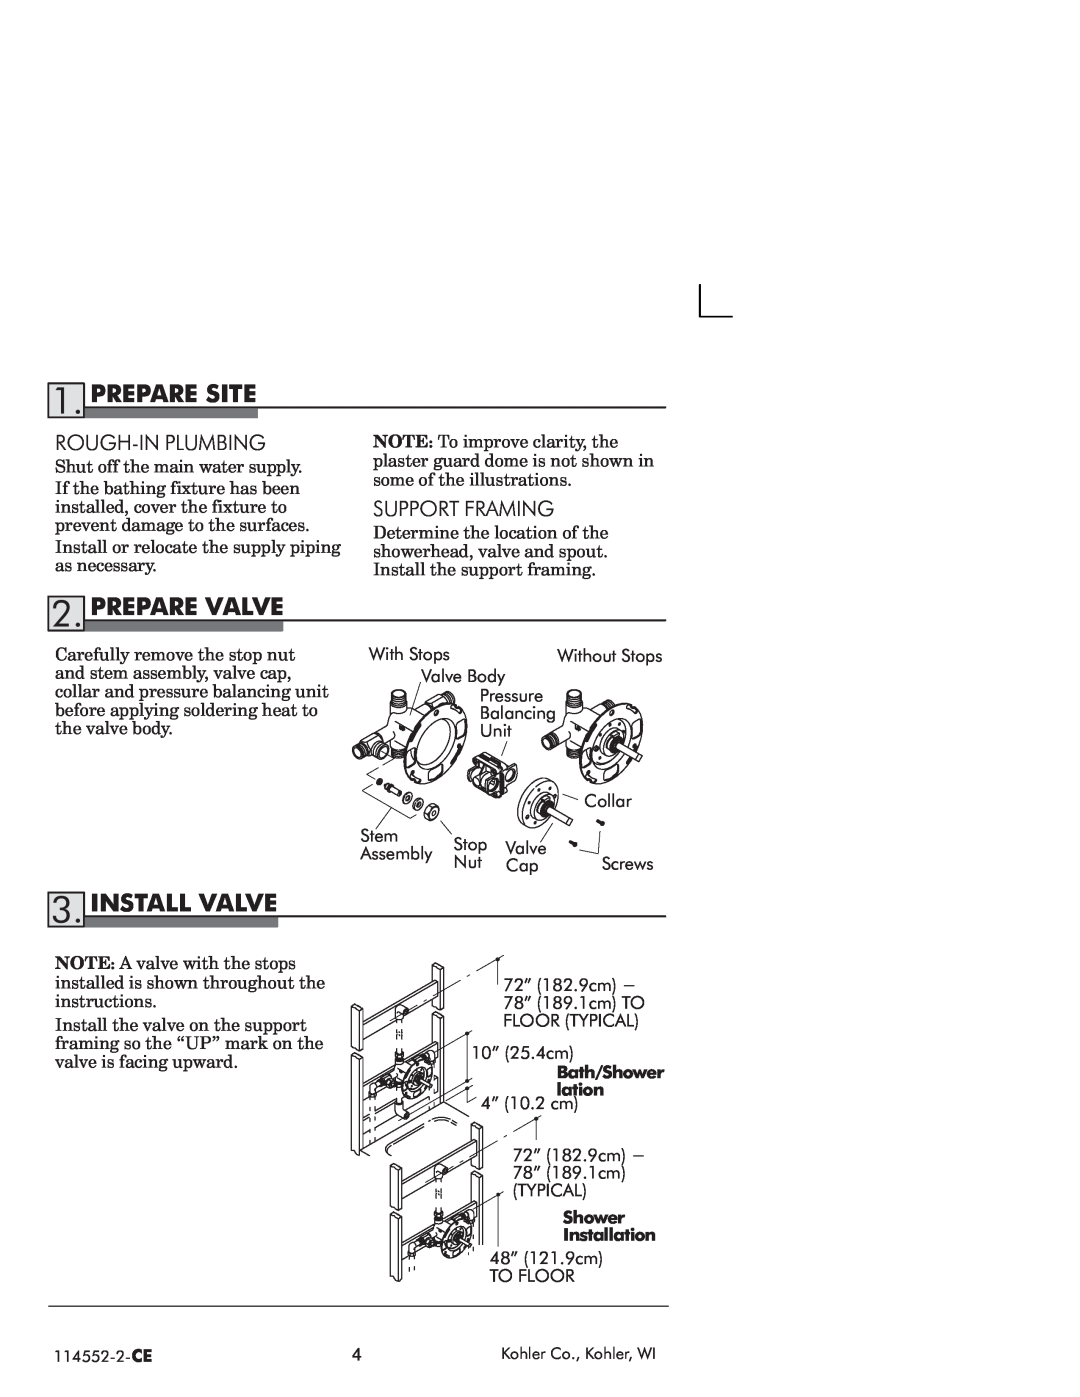 Kohler 114522-2-CE manual Site, Prepare Valve, Install Valve, Roughin, Pluming, Frming, Support 